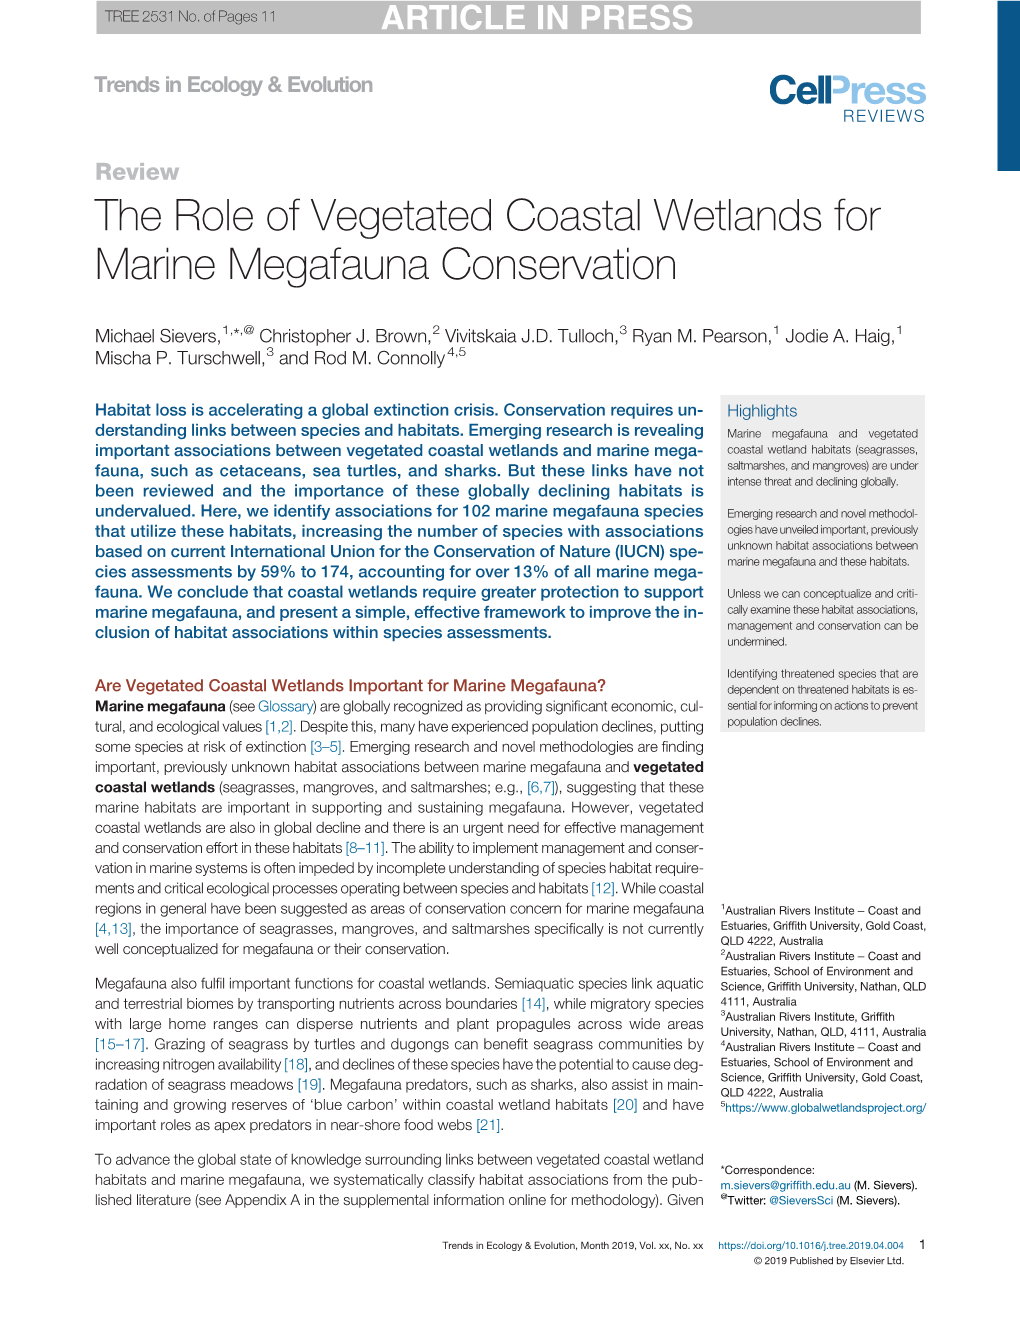 The Role of Vegetated Coastal Wetlands for Marine Megafauna Conservation